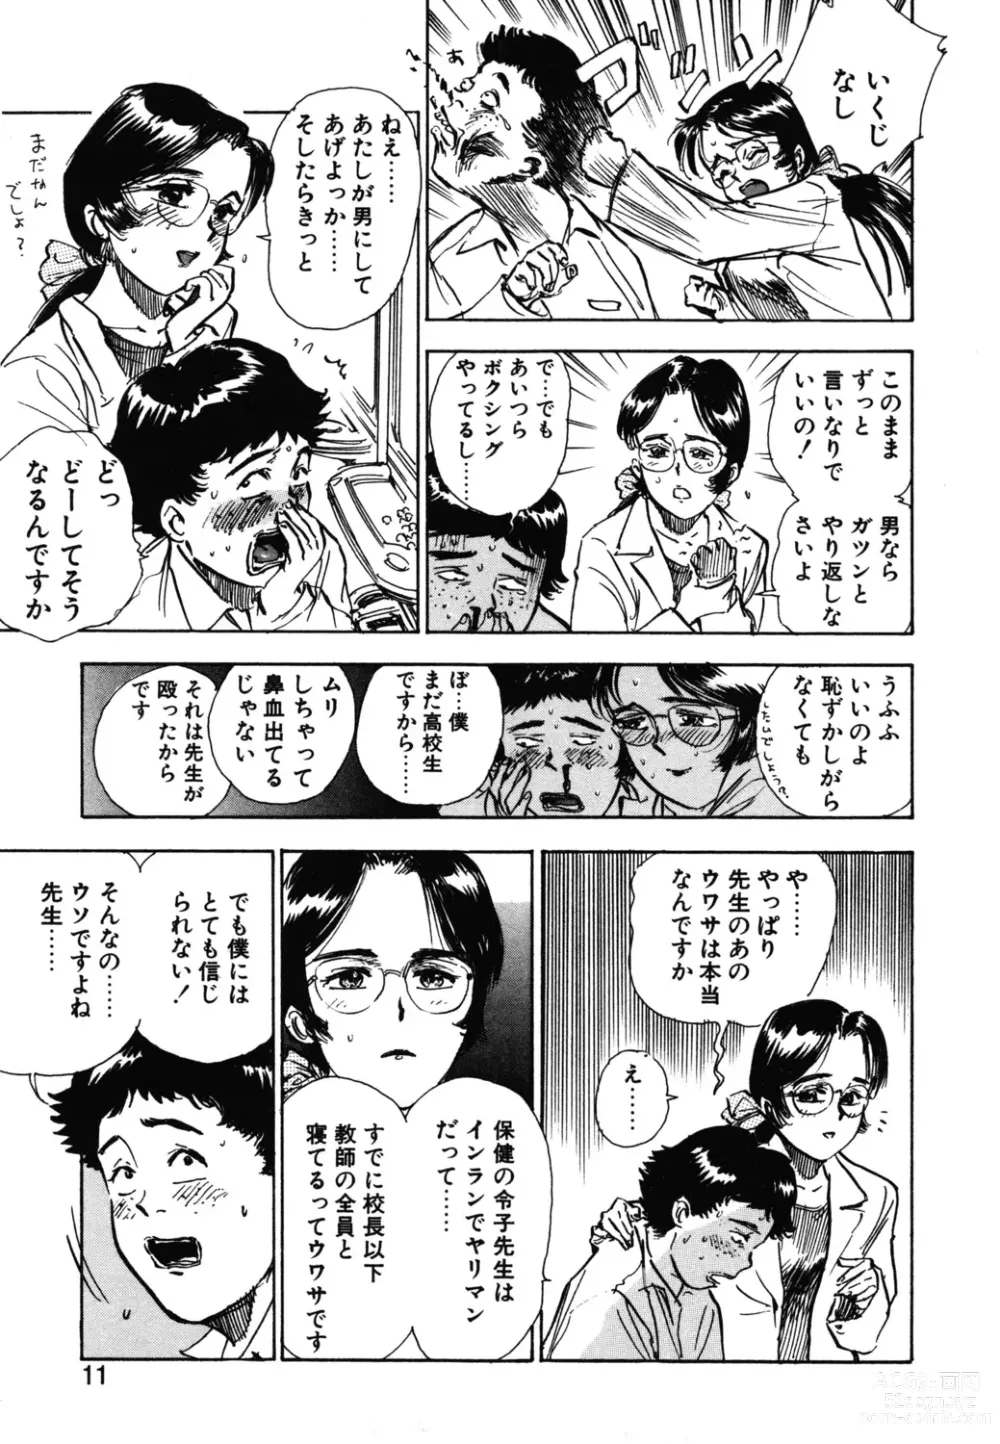 Page 9 of manga Abunai Reiko Sensei 1